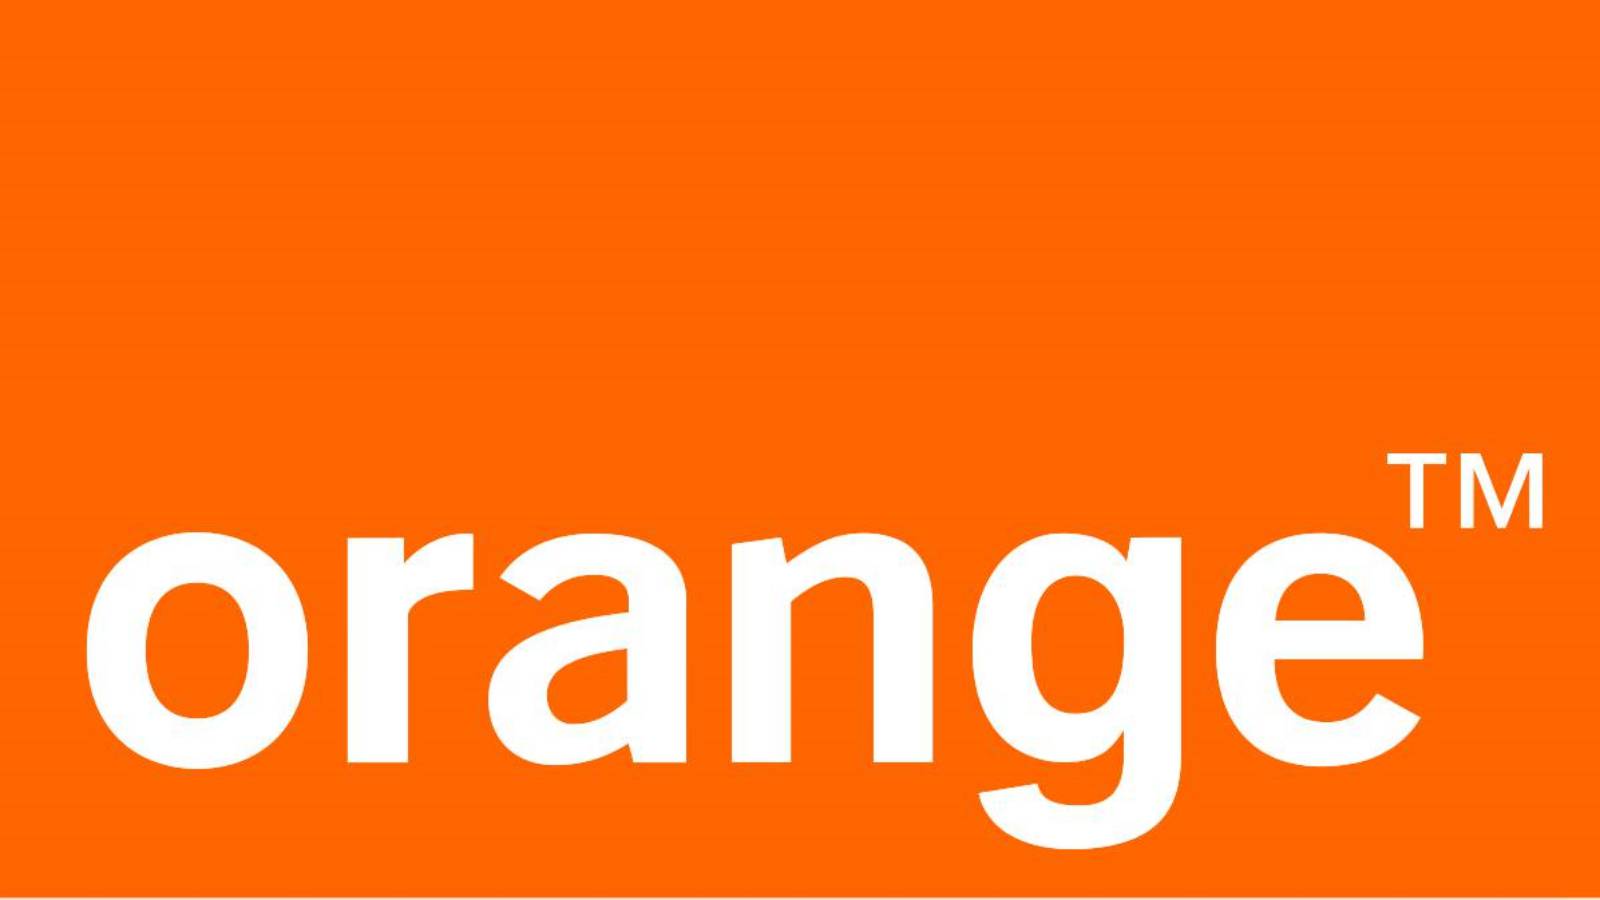 naranja Rumania renuncia al 3G